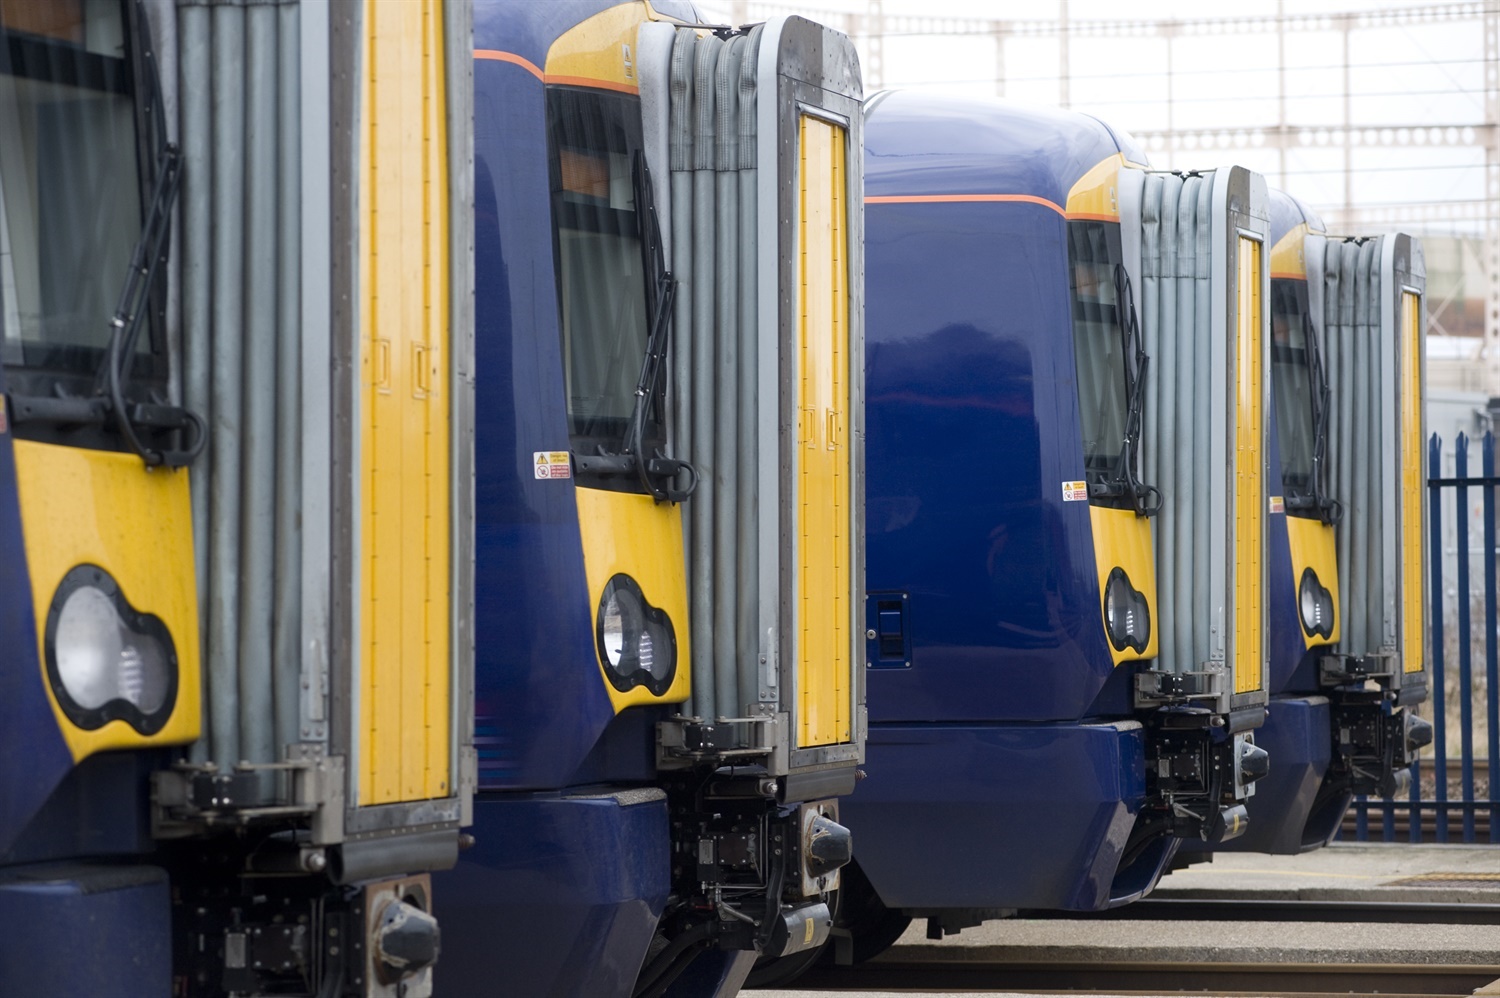 More international operators seek to win UK rail franchises